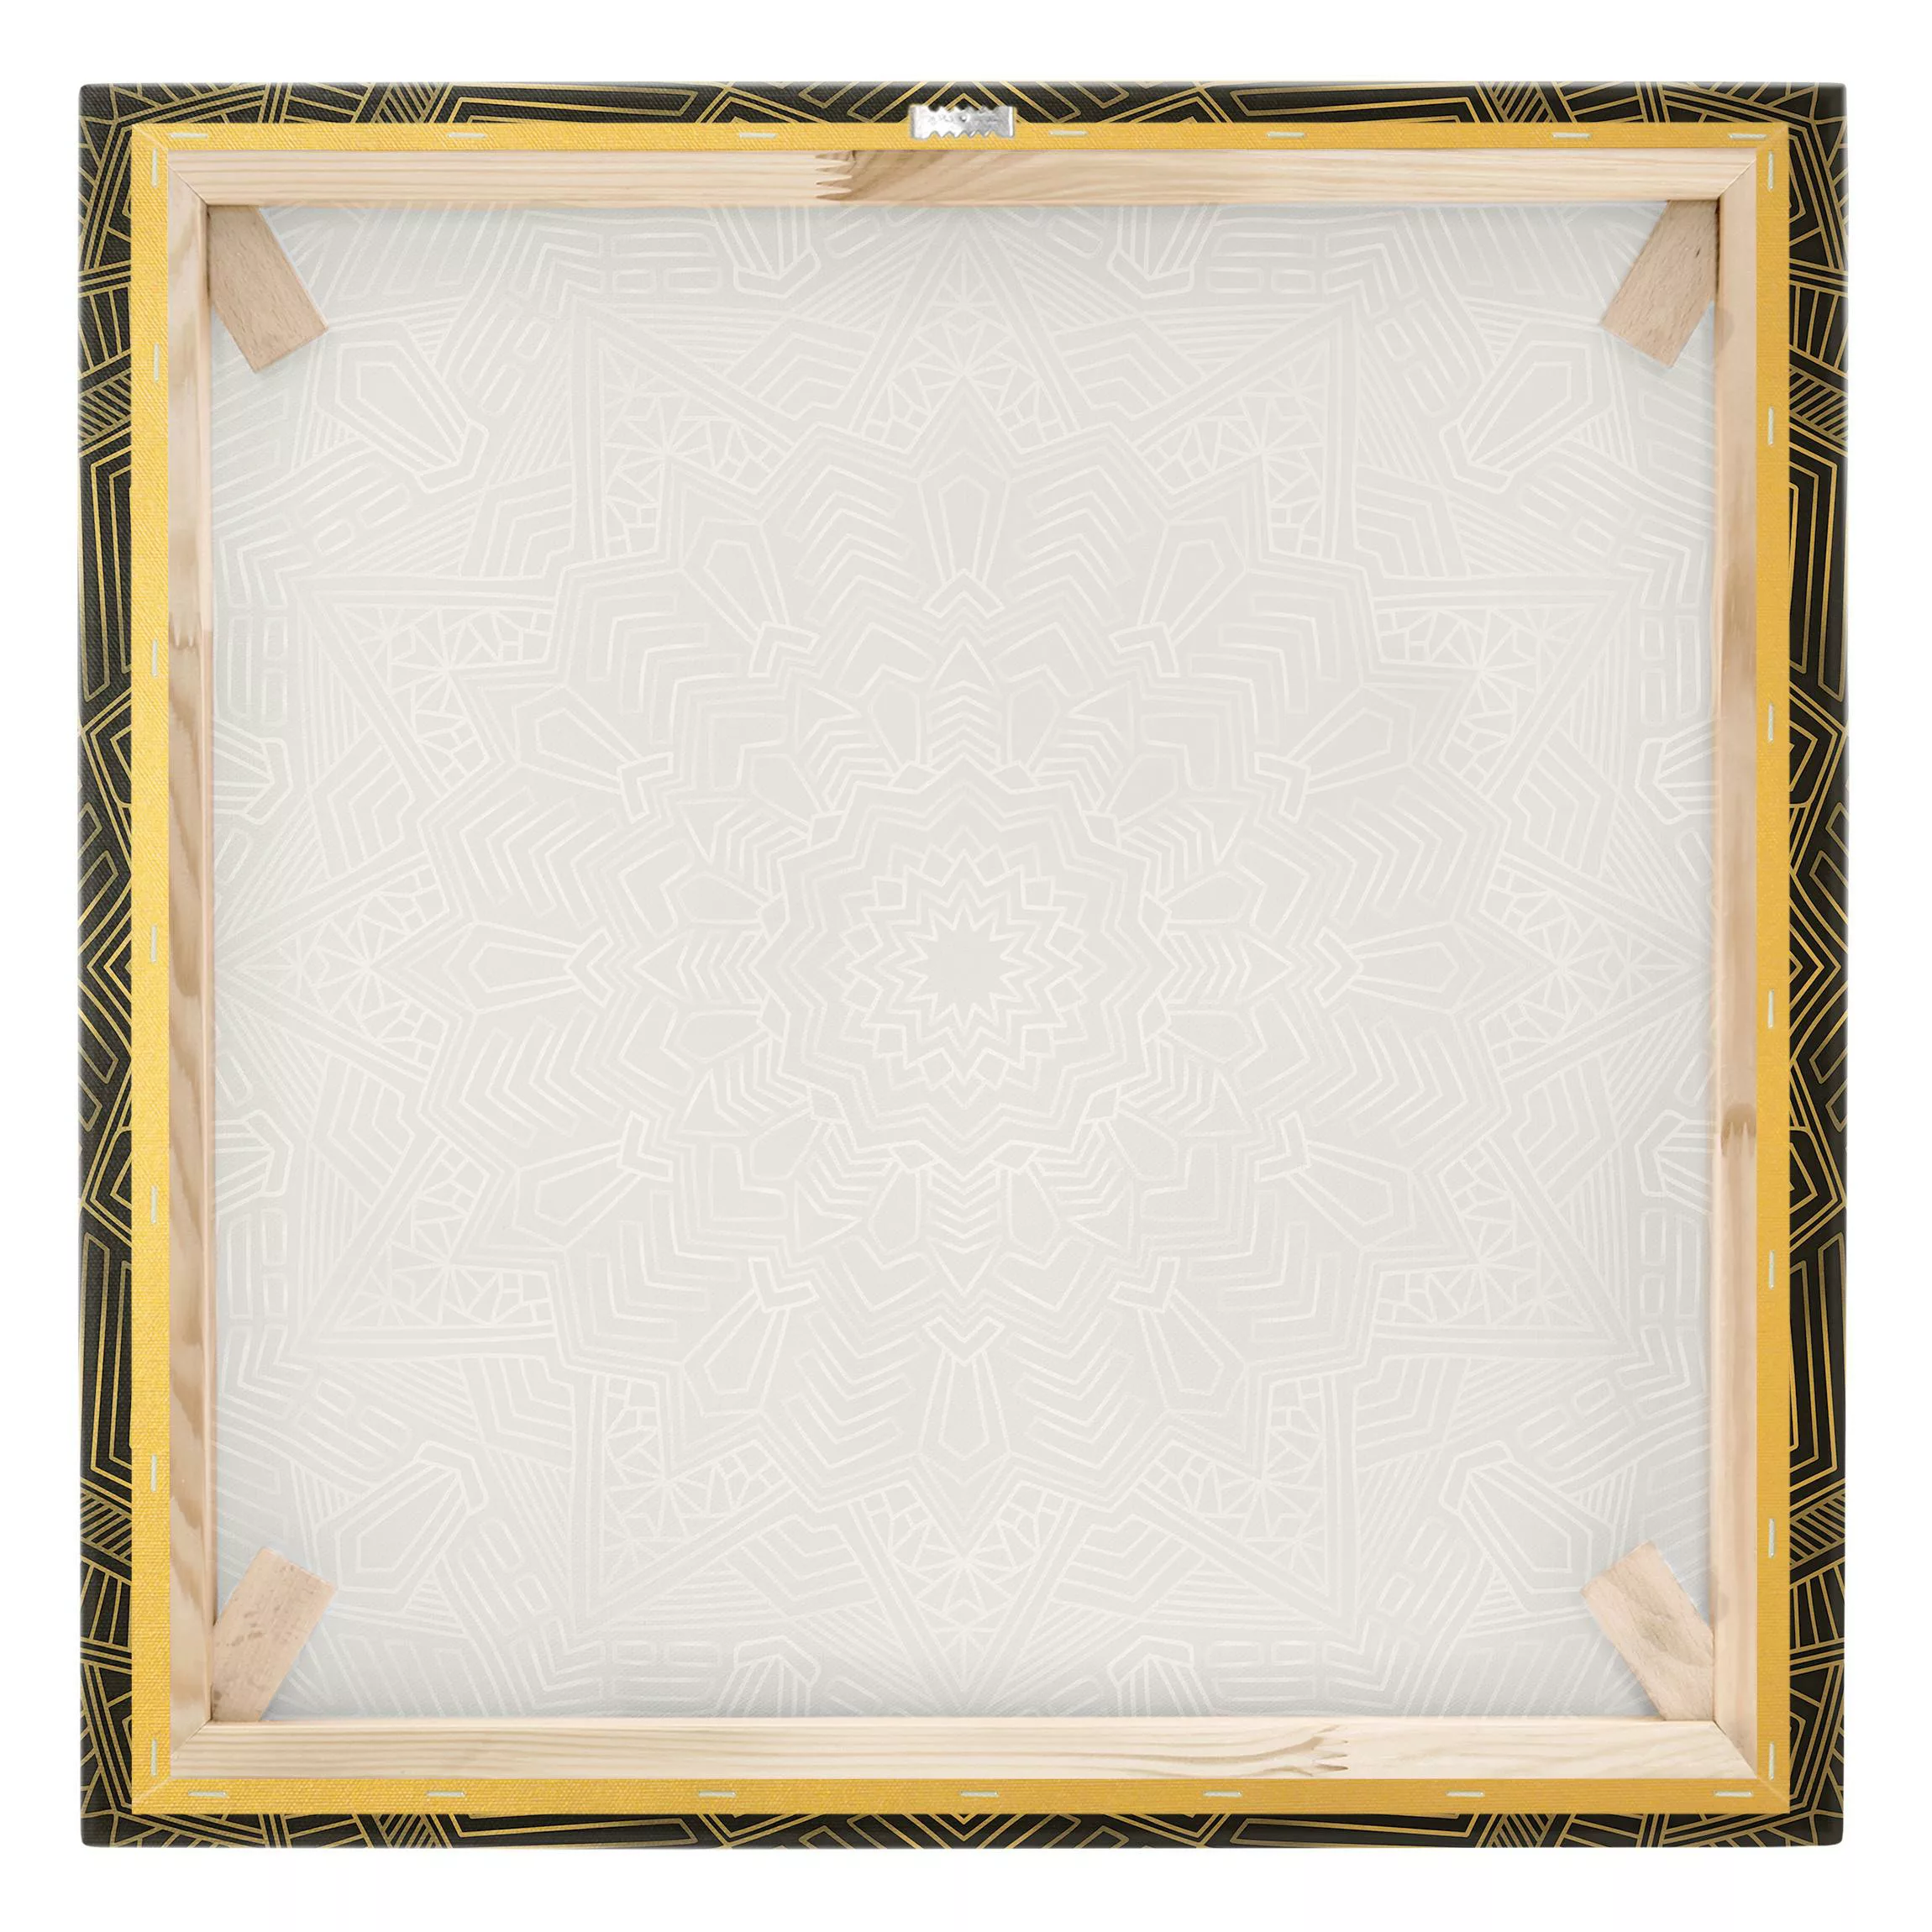 Leinwandbild Gold Mandala Stern Muster silber schwarz günstig online kaufen